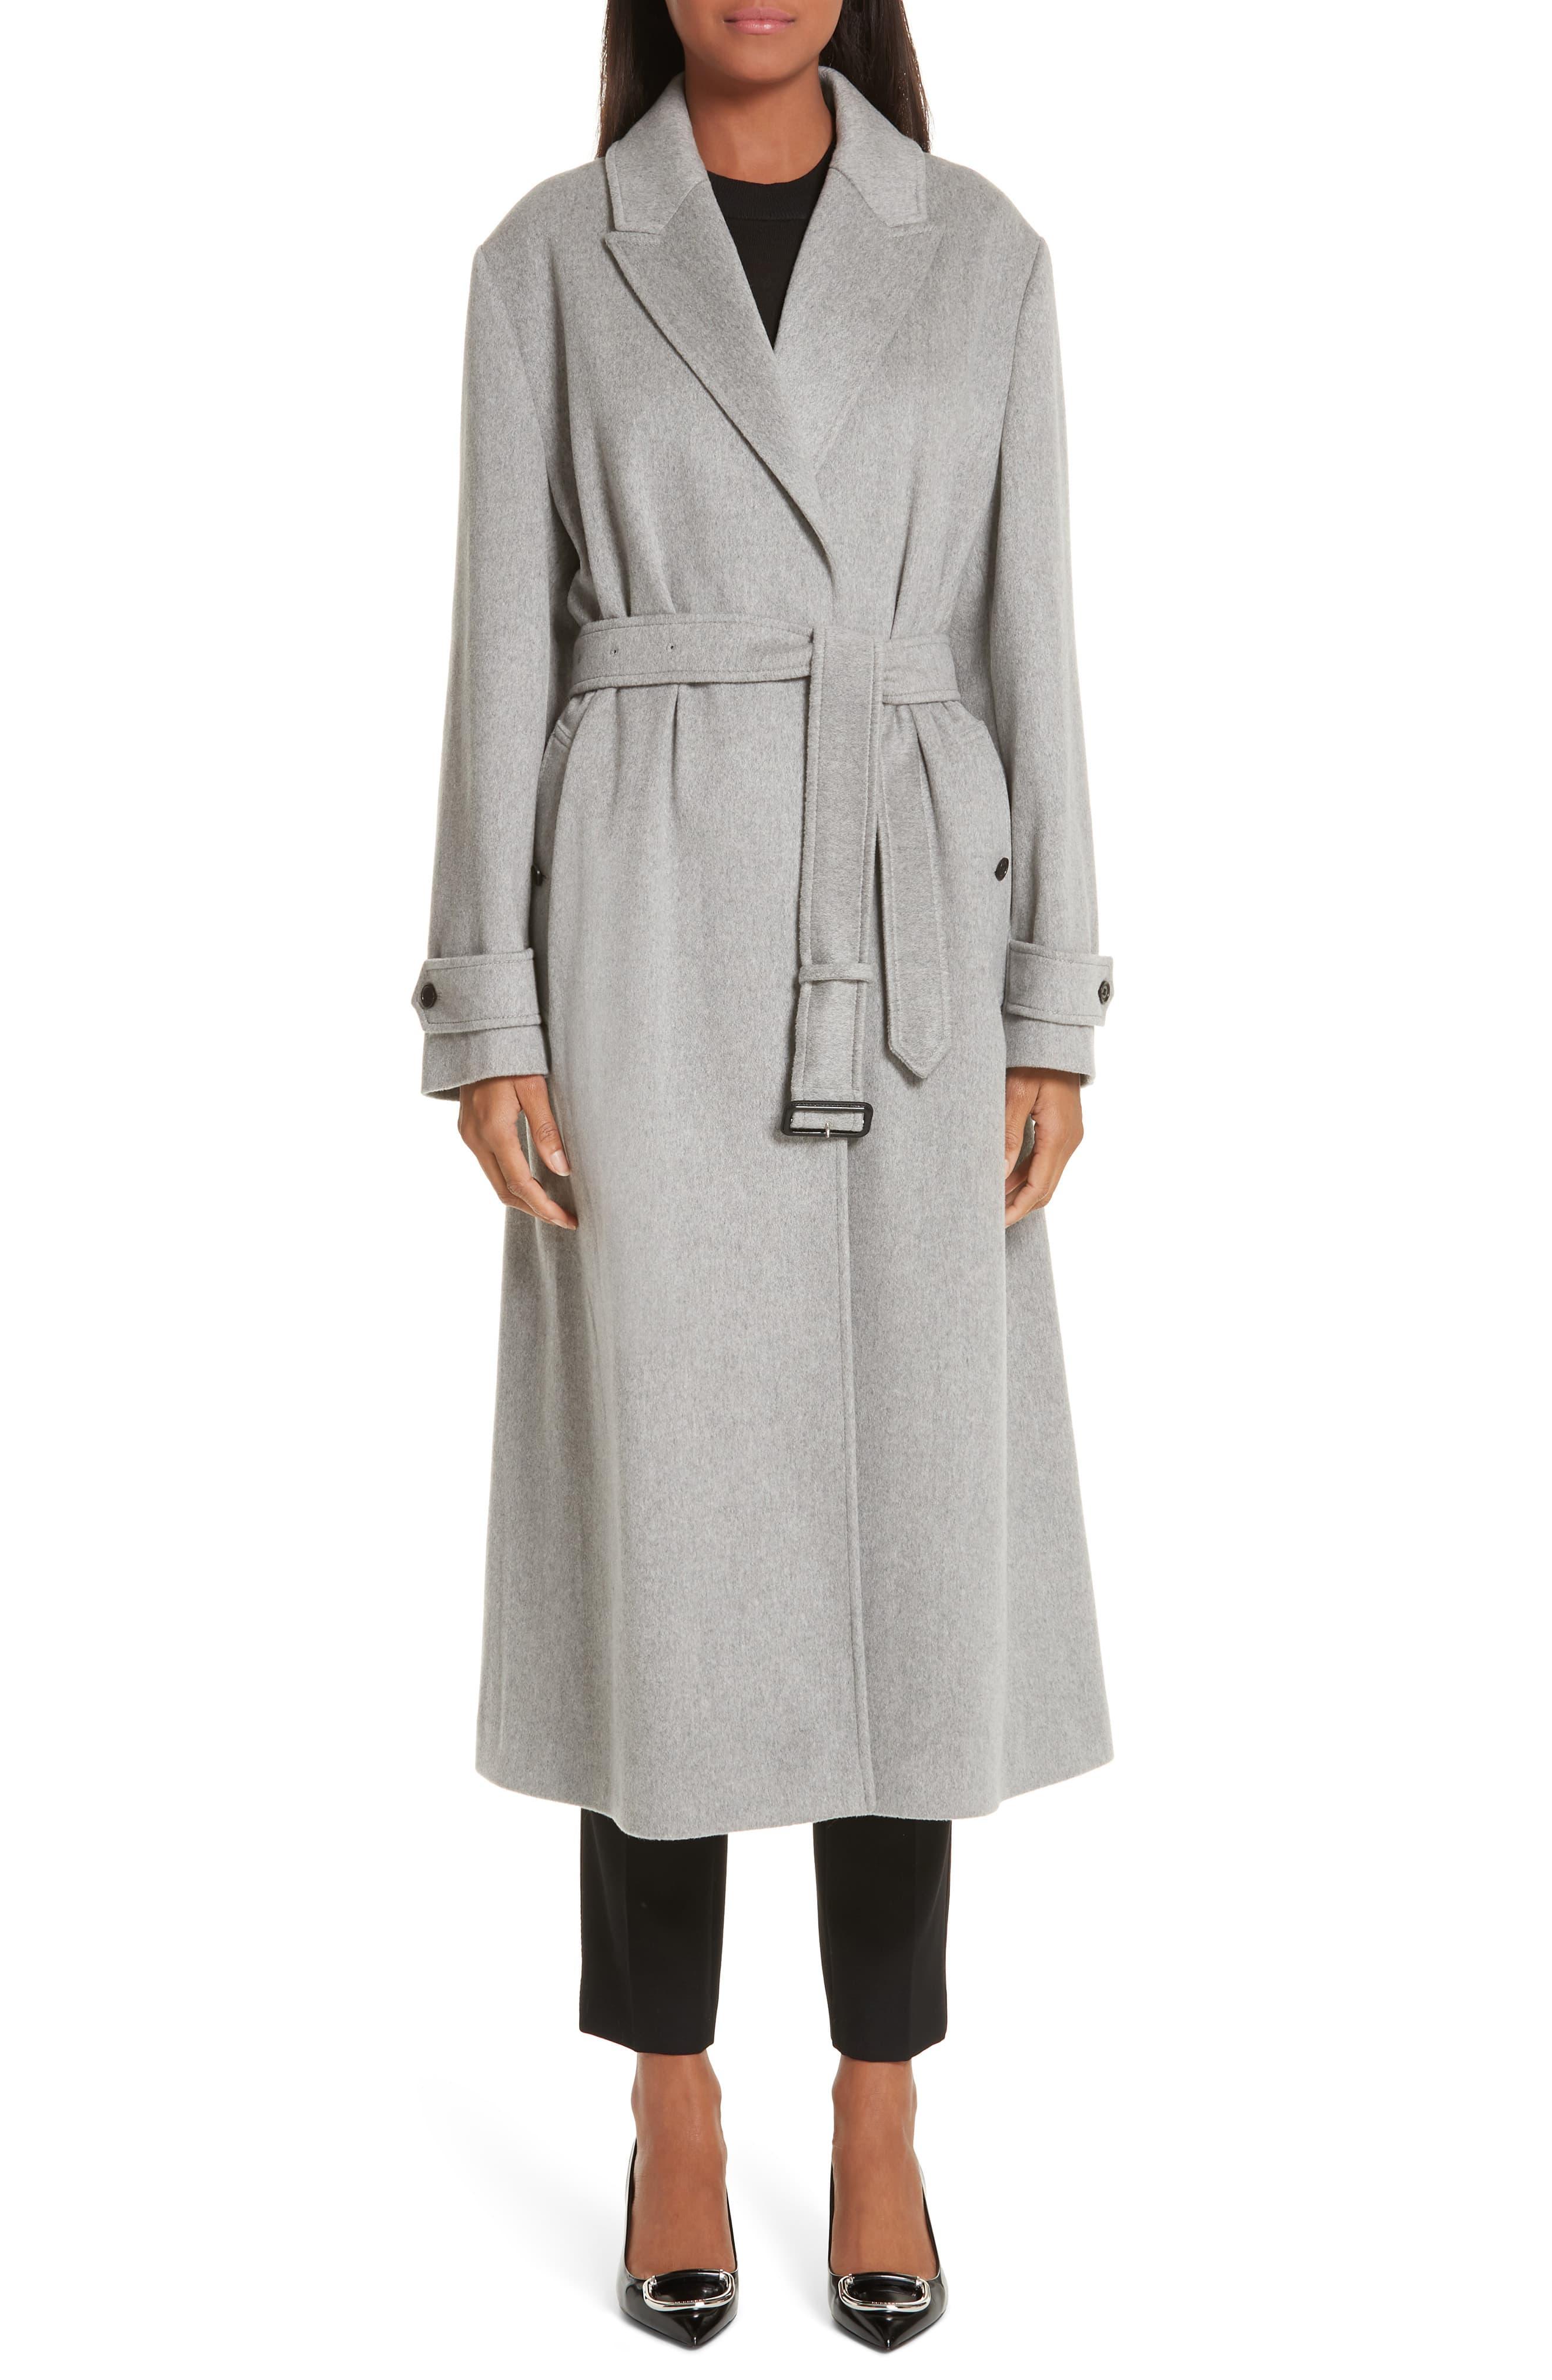 Burberry Oxshott Wrap Cashmere Coat in Grey (Gray) - Lyst